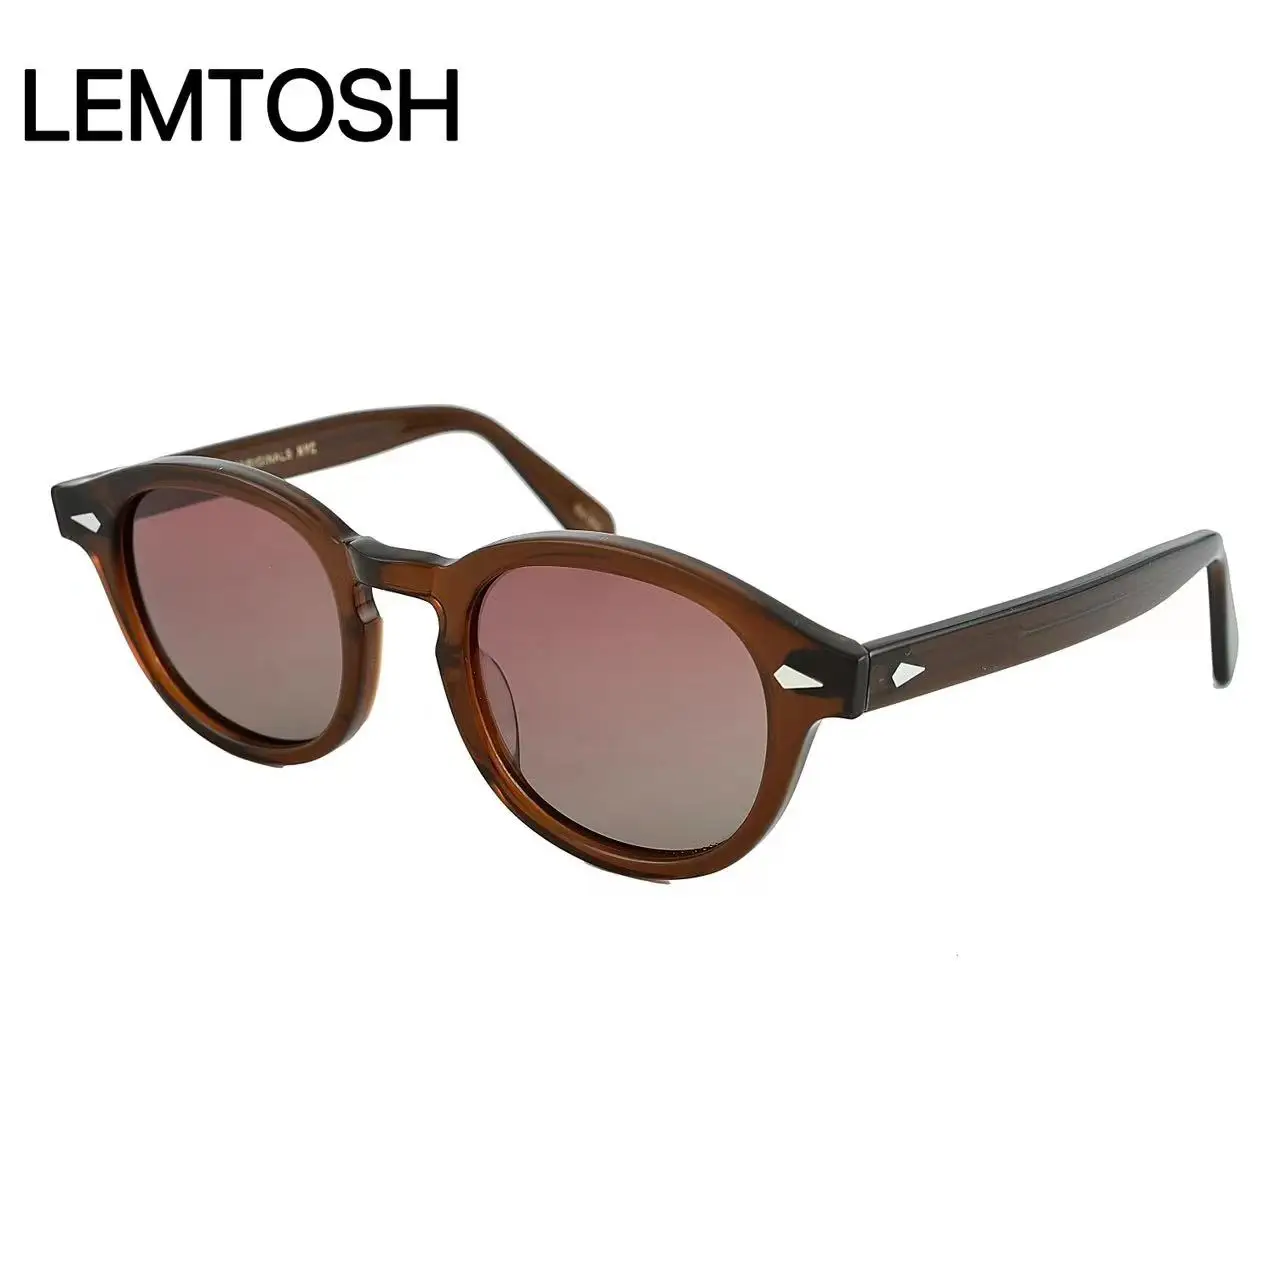 

Authentic MOSCOT LEMTOSH Johnny Depp Brown Frame Men Women Sun Glasses Retro Classic Fashion Male Couple Eyewear With Case